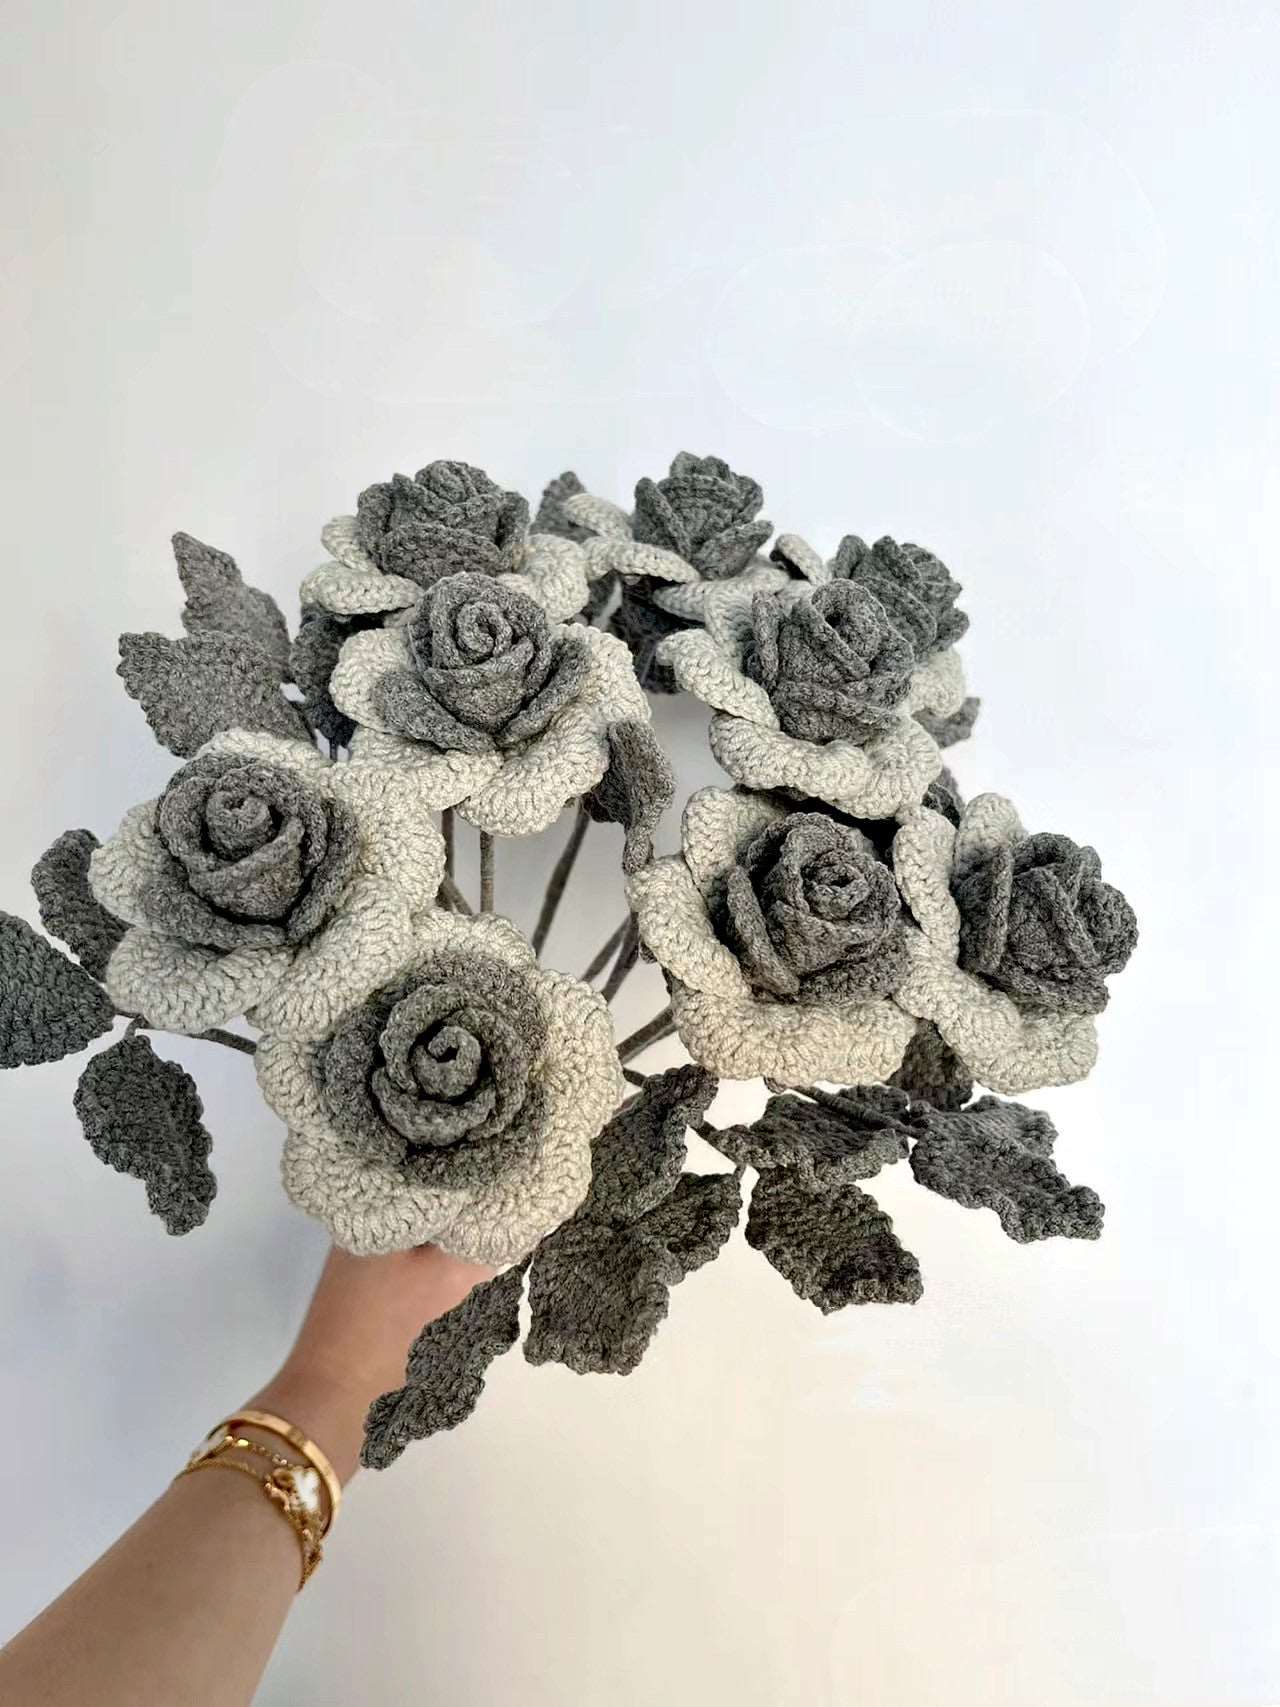 Artisanal Grey Rose Posy for Wedding Centerpieces